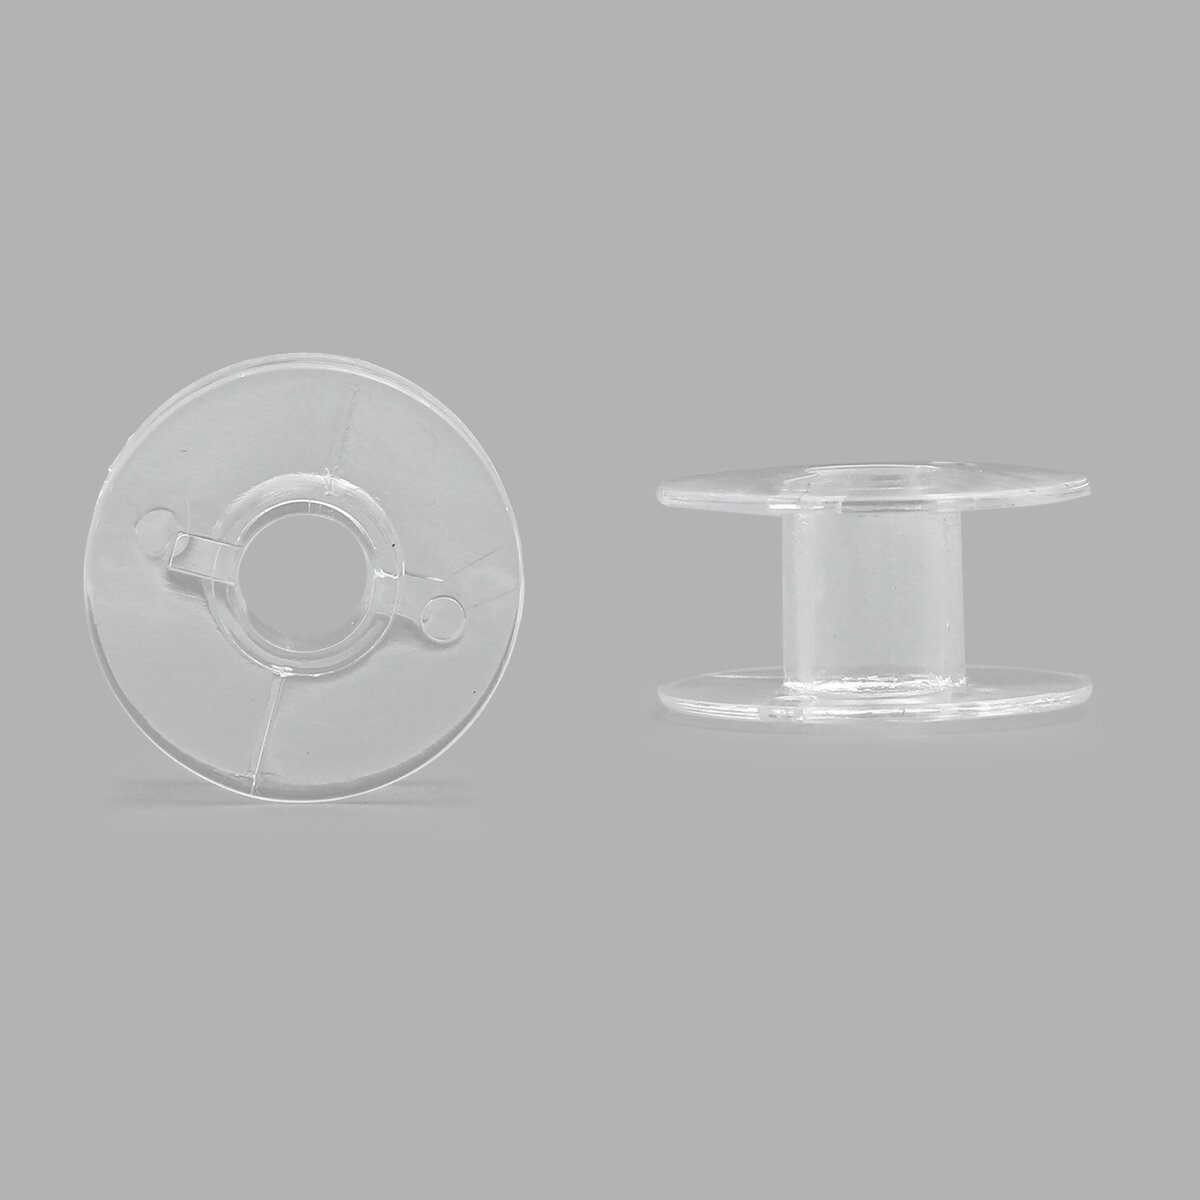 Шпулька для швейных машин, диаметр 19 мм, высота 10 мм, пластик, Н/Н 5819 (прозрачный), 10 шт